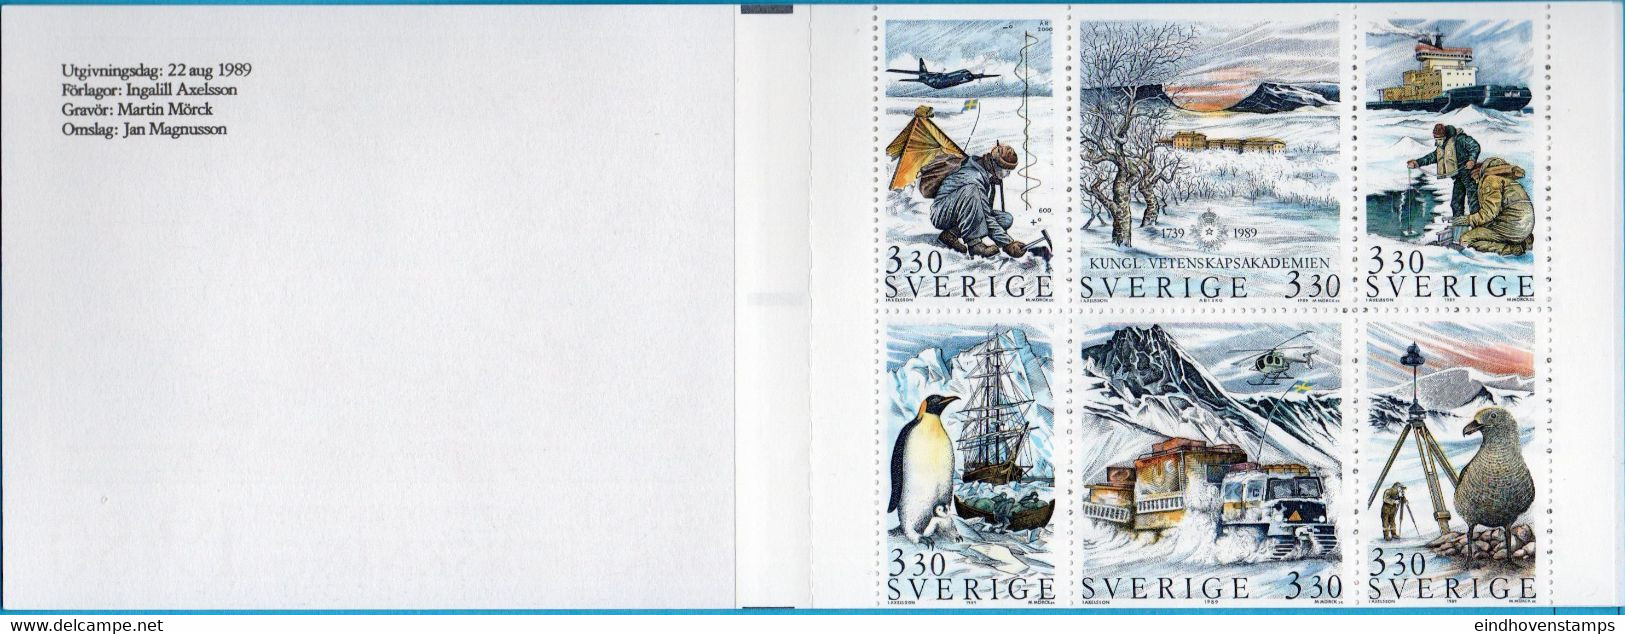 Sweden Sverige 1989 Stamp Booklet Polar Research Cancelled Academy Of Science MNH 89M141 - Onderzoeksprogramma's